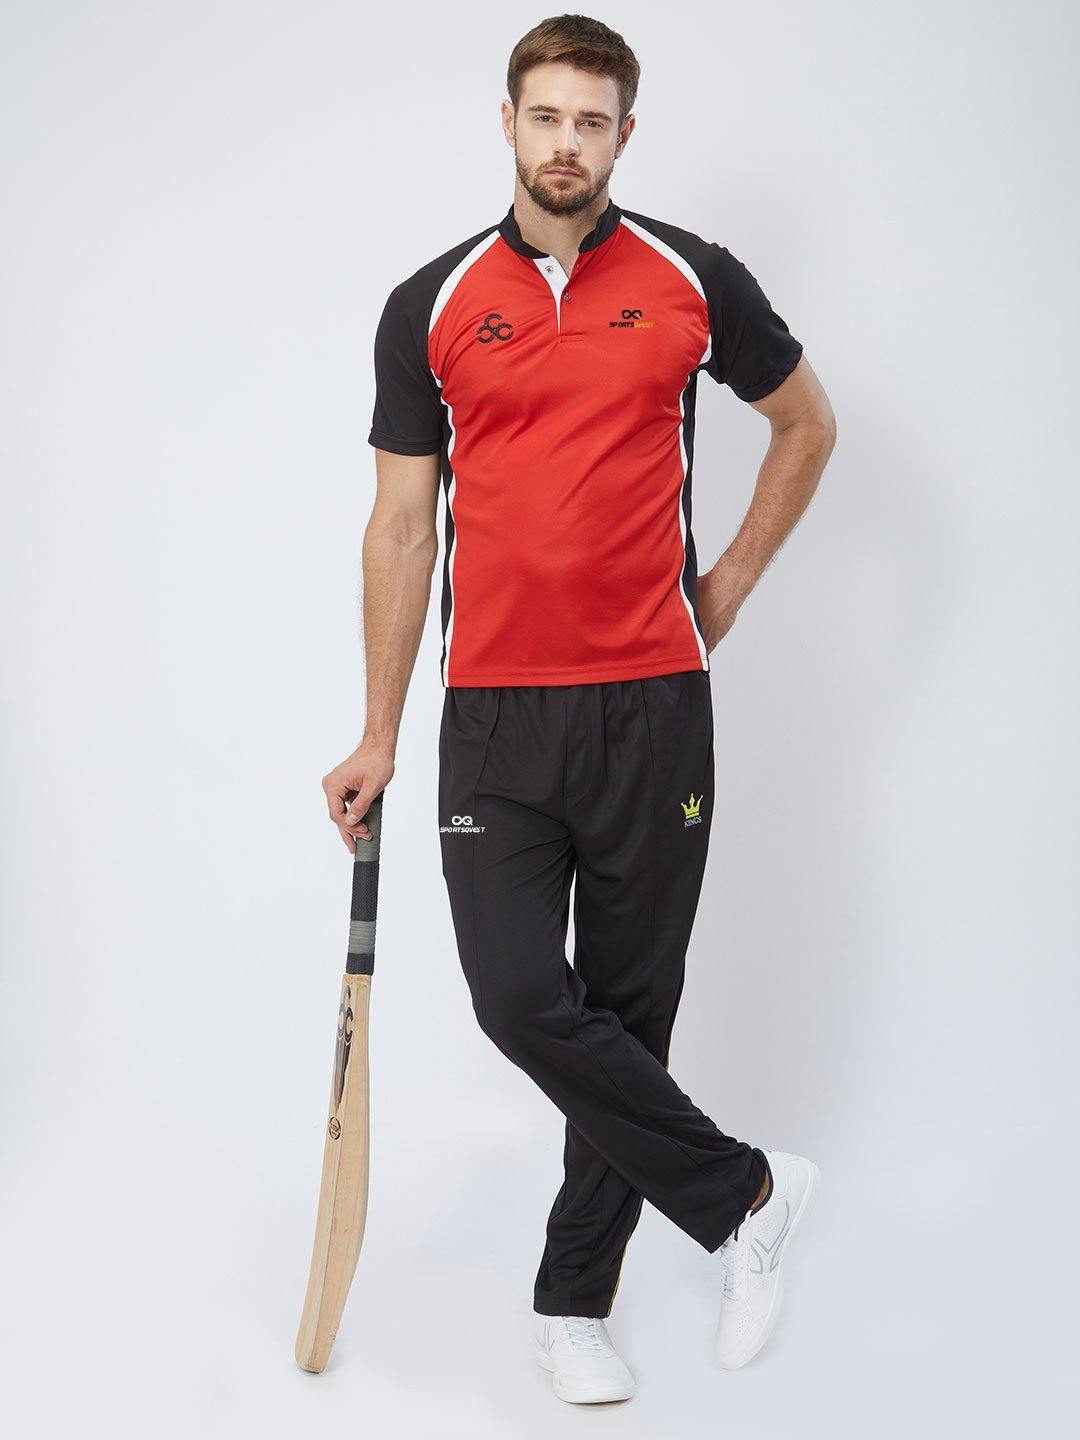 Cricket Cotton Plain Men's Sportswear at Rs 300/piece in